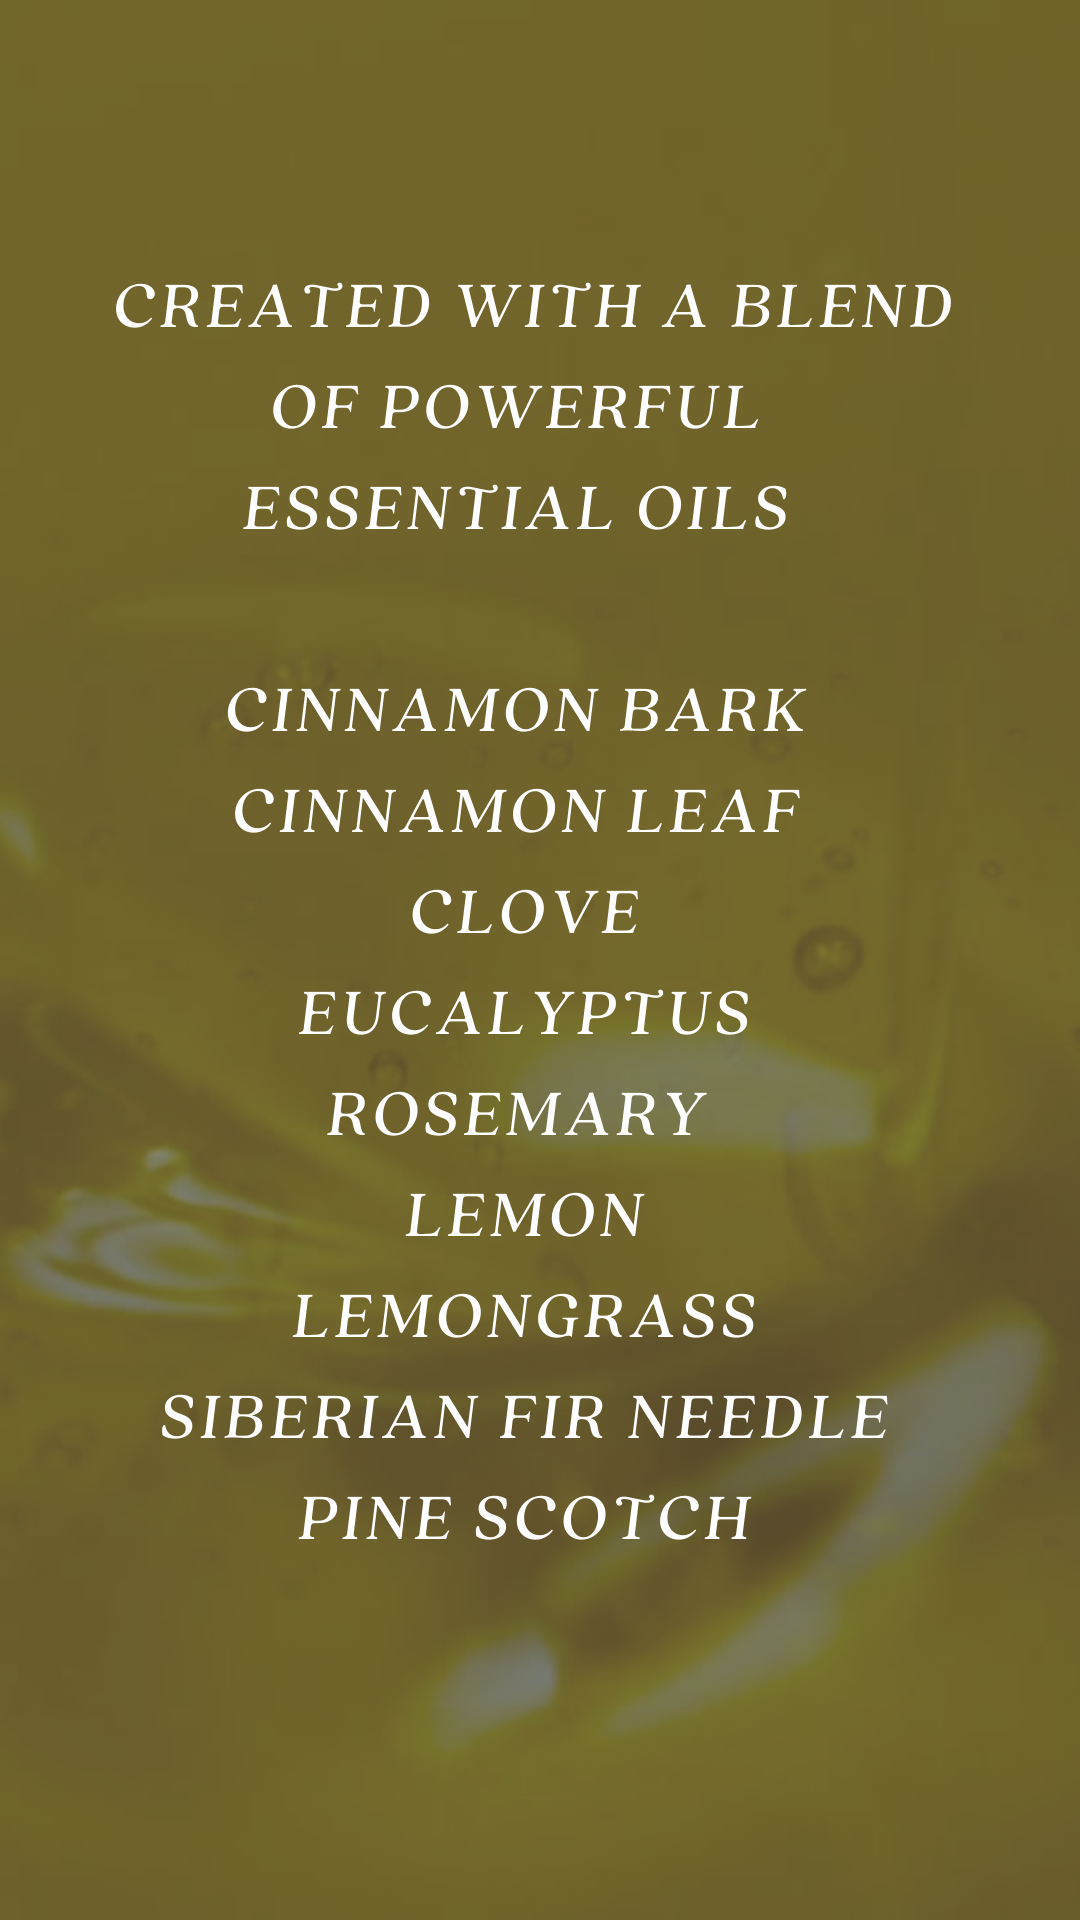 ROMANI REMEDY™ - Essential Oil Blend